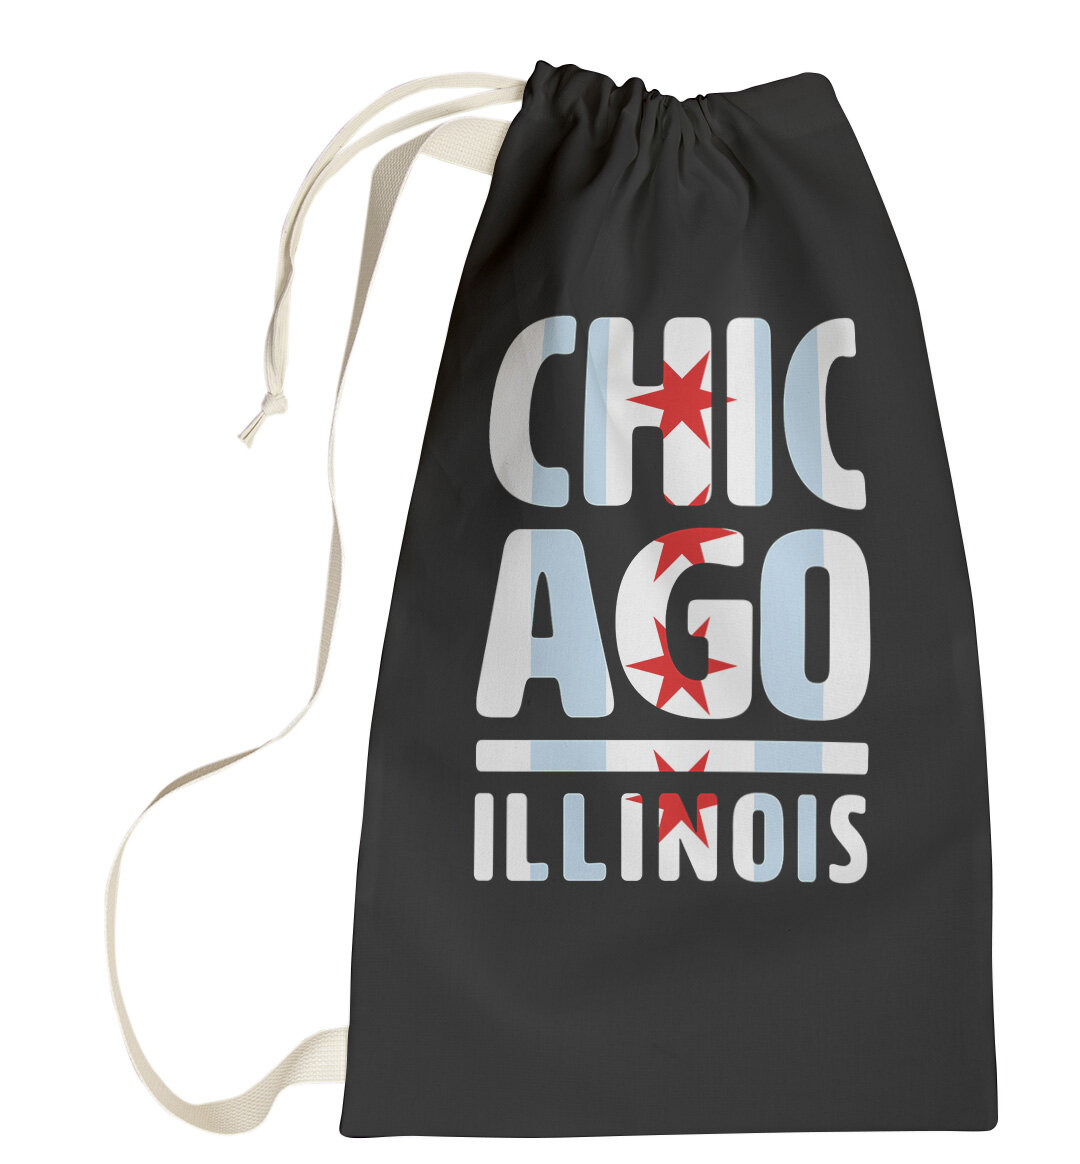 chicago bag